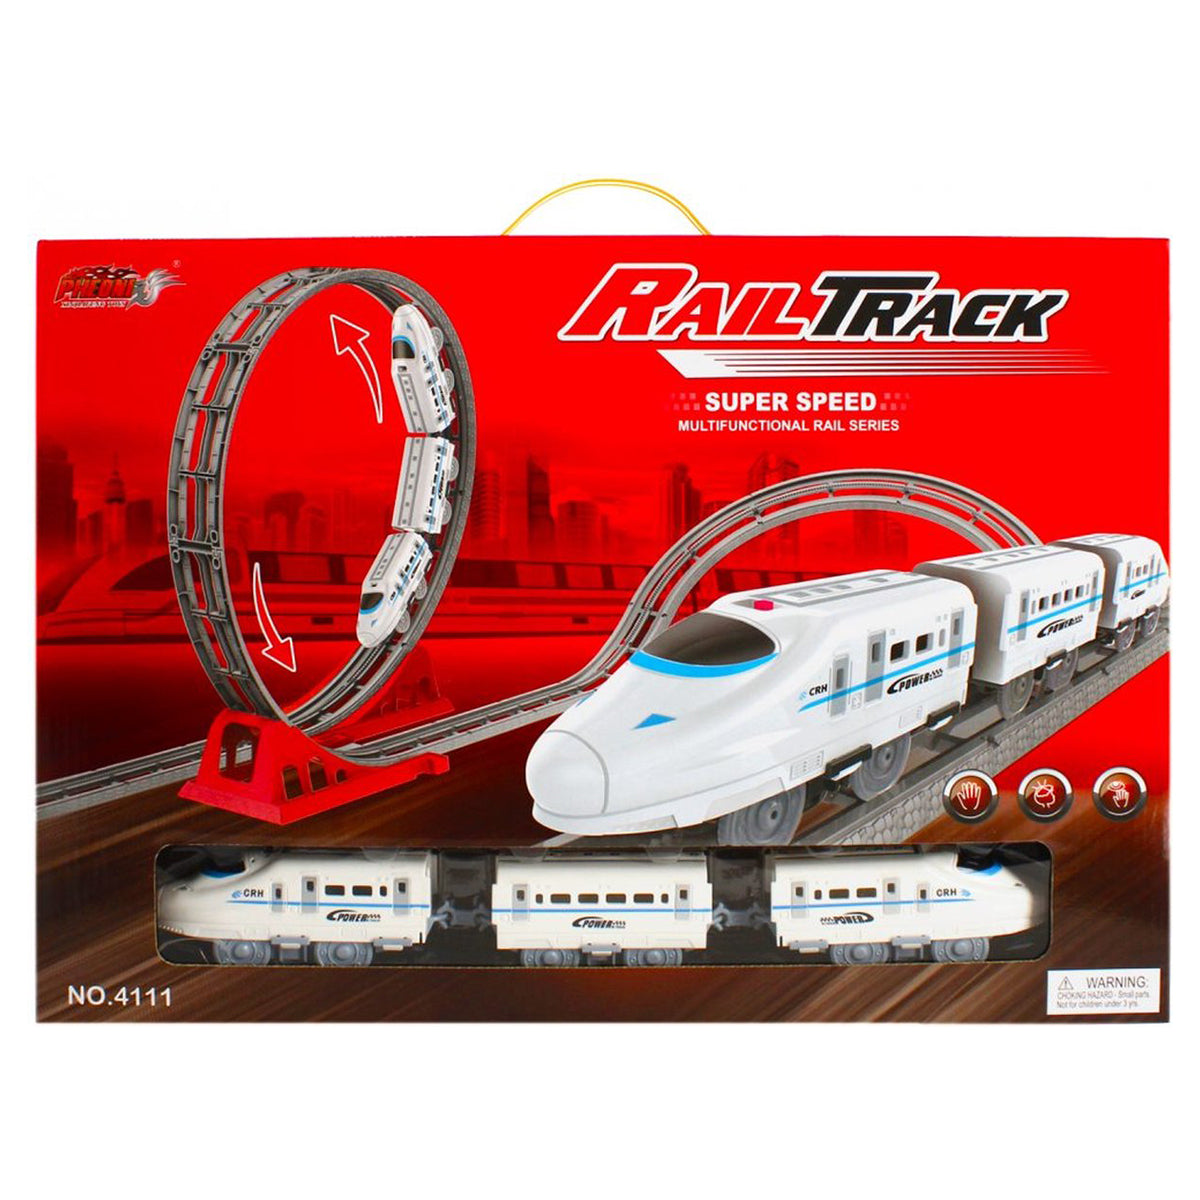 <tc>Ariko</tc> Rail Track Train track - Race track - 40 piece - Train set